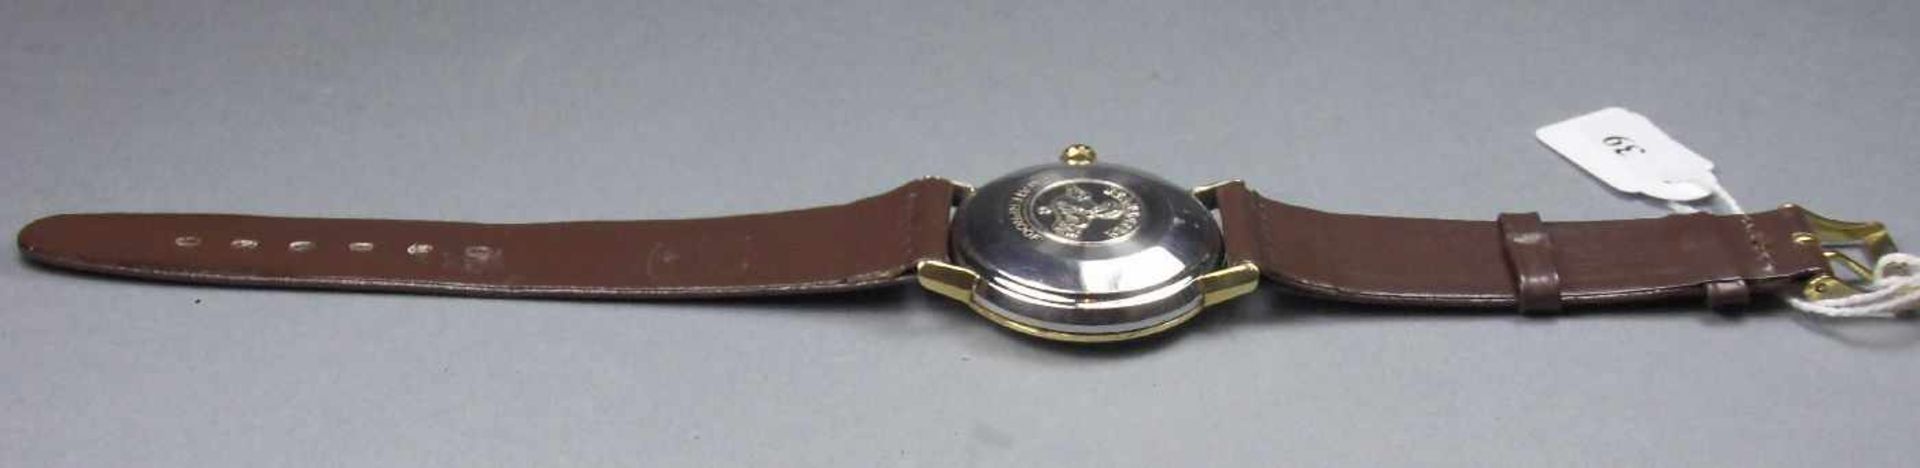 VINTAGE ARMBANDUHR OMEGA SEAMASTER / wristwatch, Manufaktur Omega Watch Co. S.A. / Schweiz, - Bild 6 aus 7